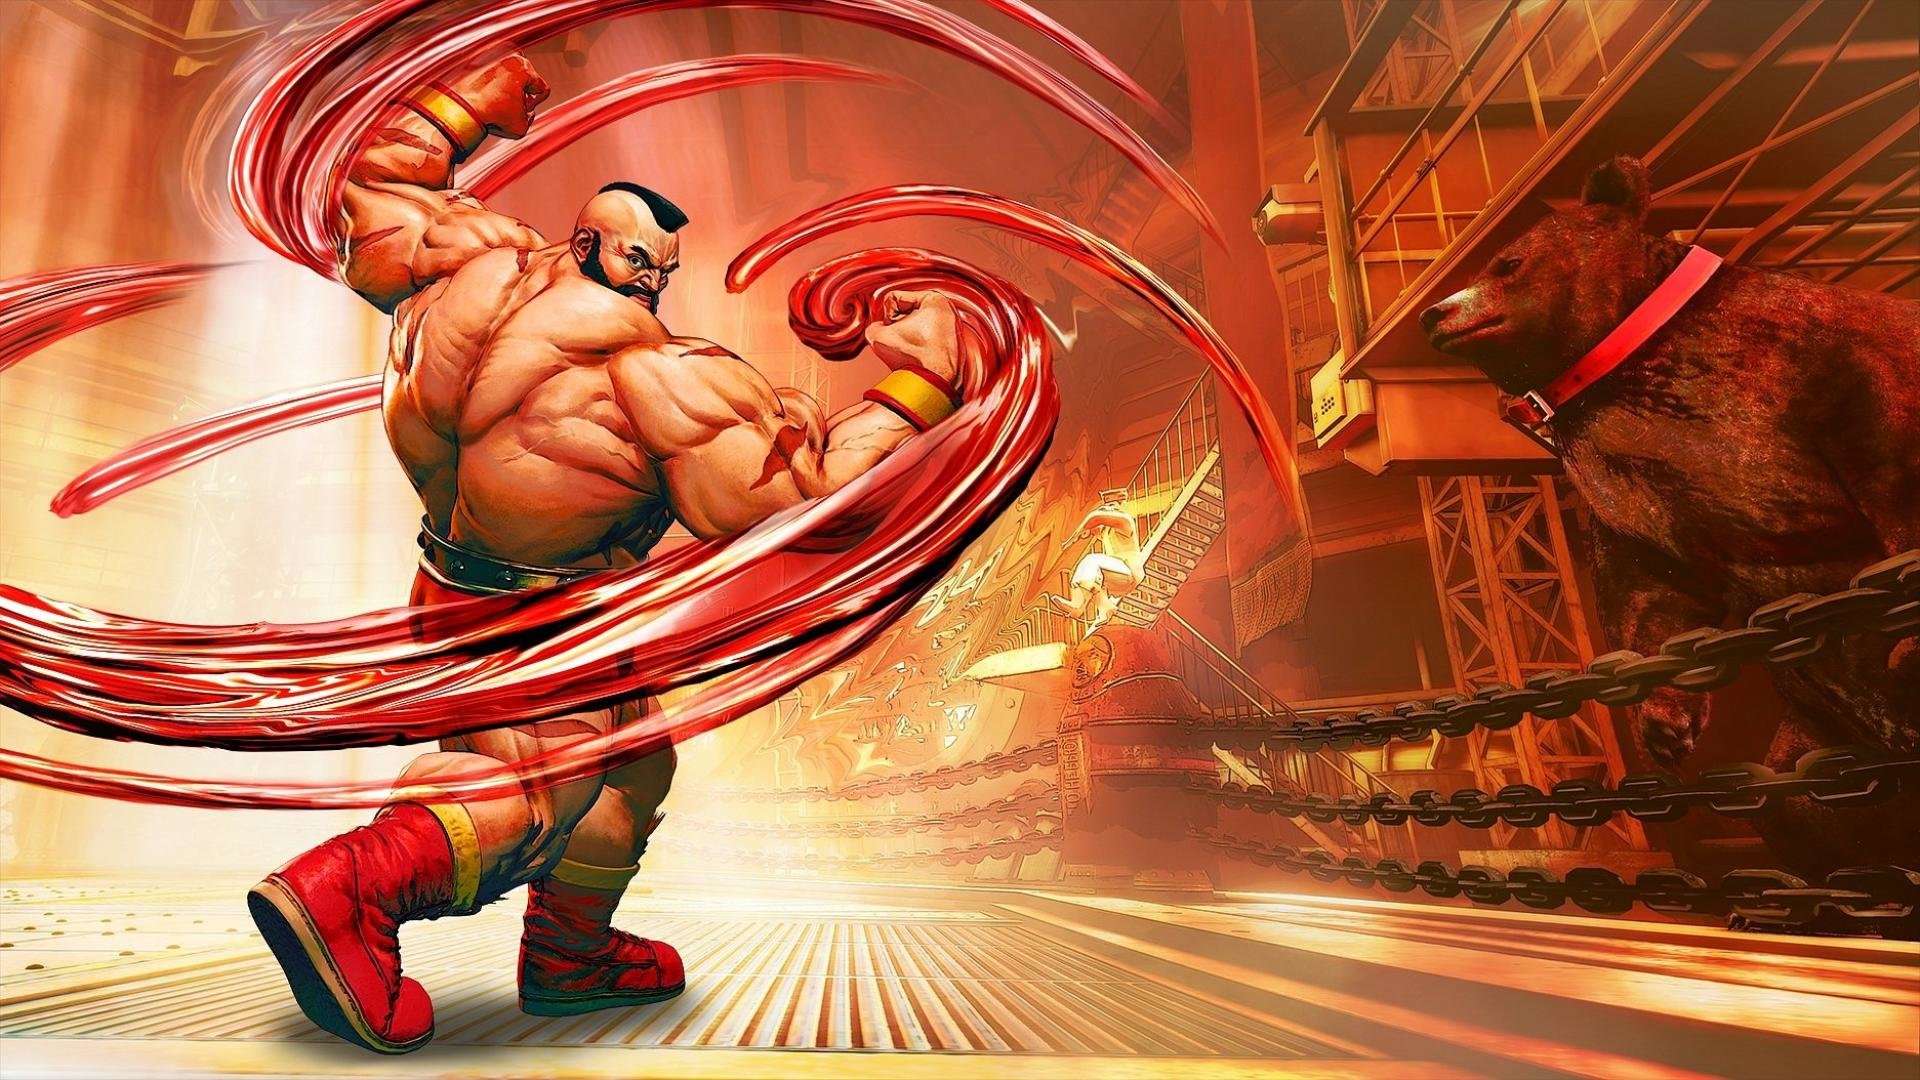 Best Street Fighter 5 wallpaper ID:470092 for High Resolution full hd computer